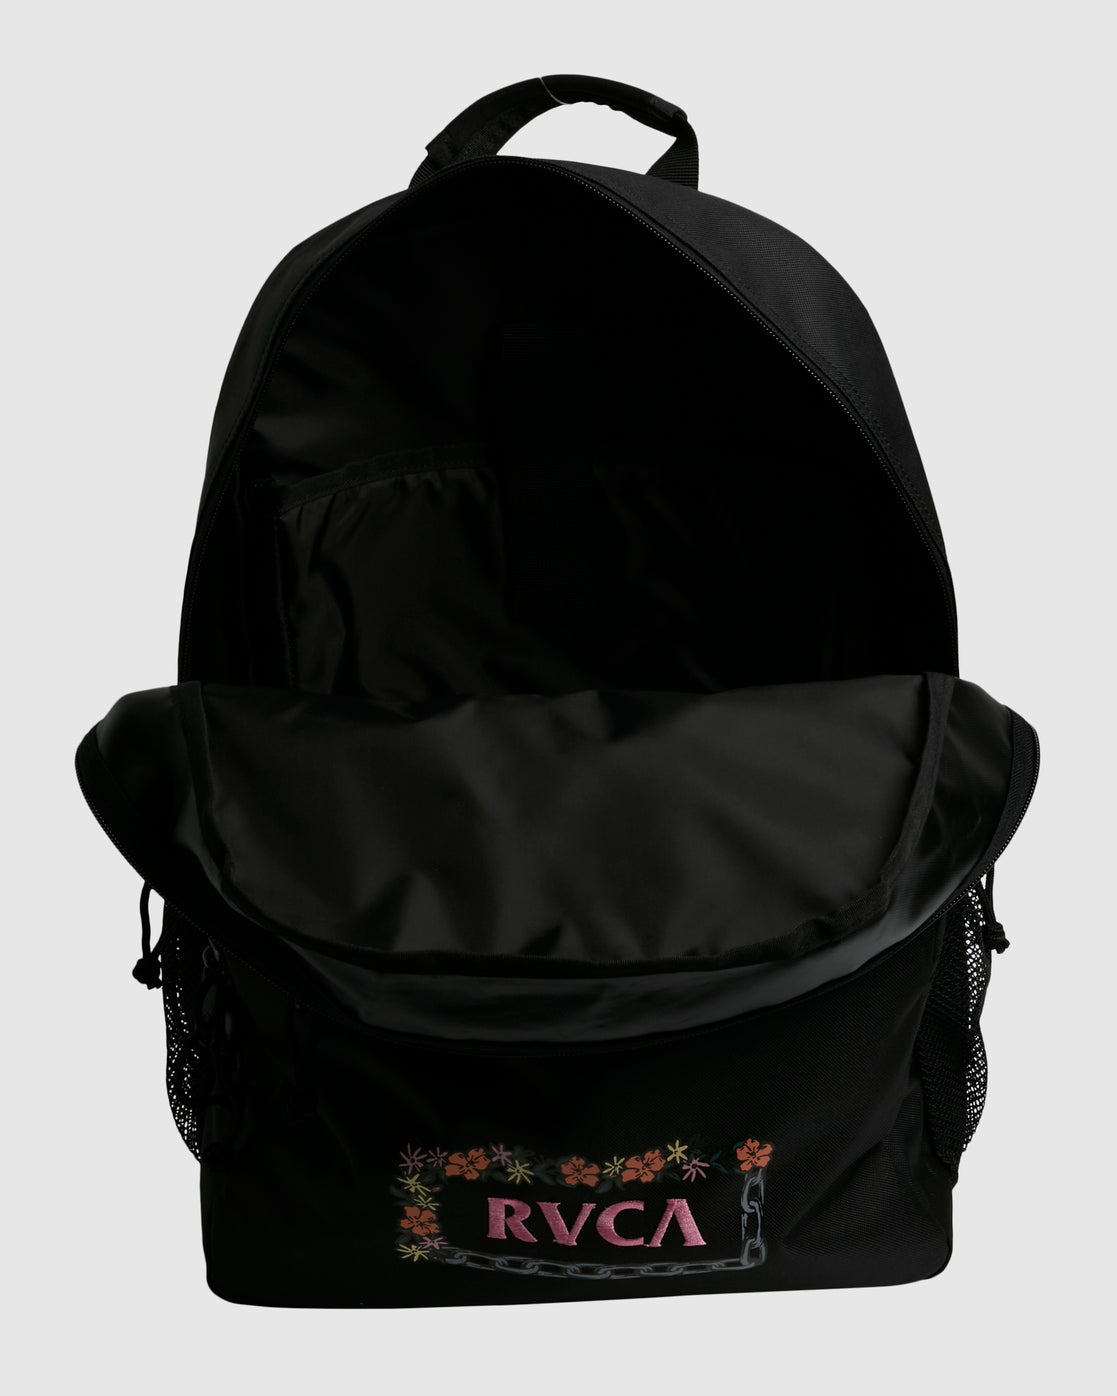 RVCA Break Away Backpack